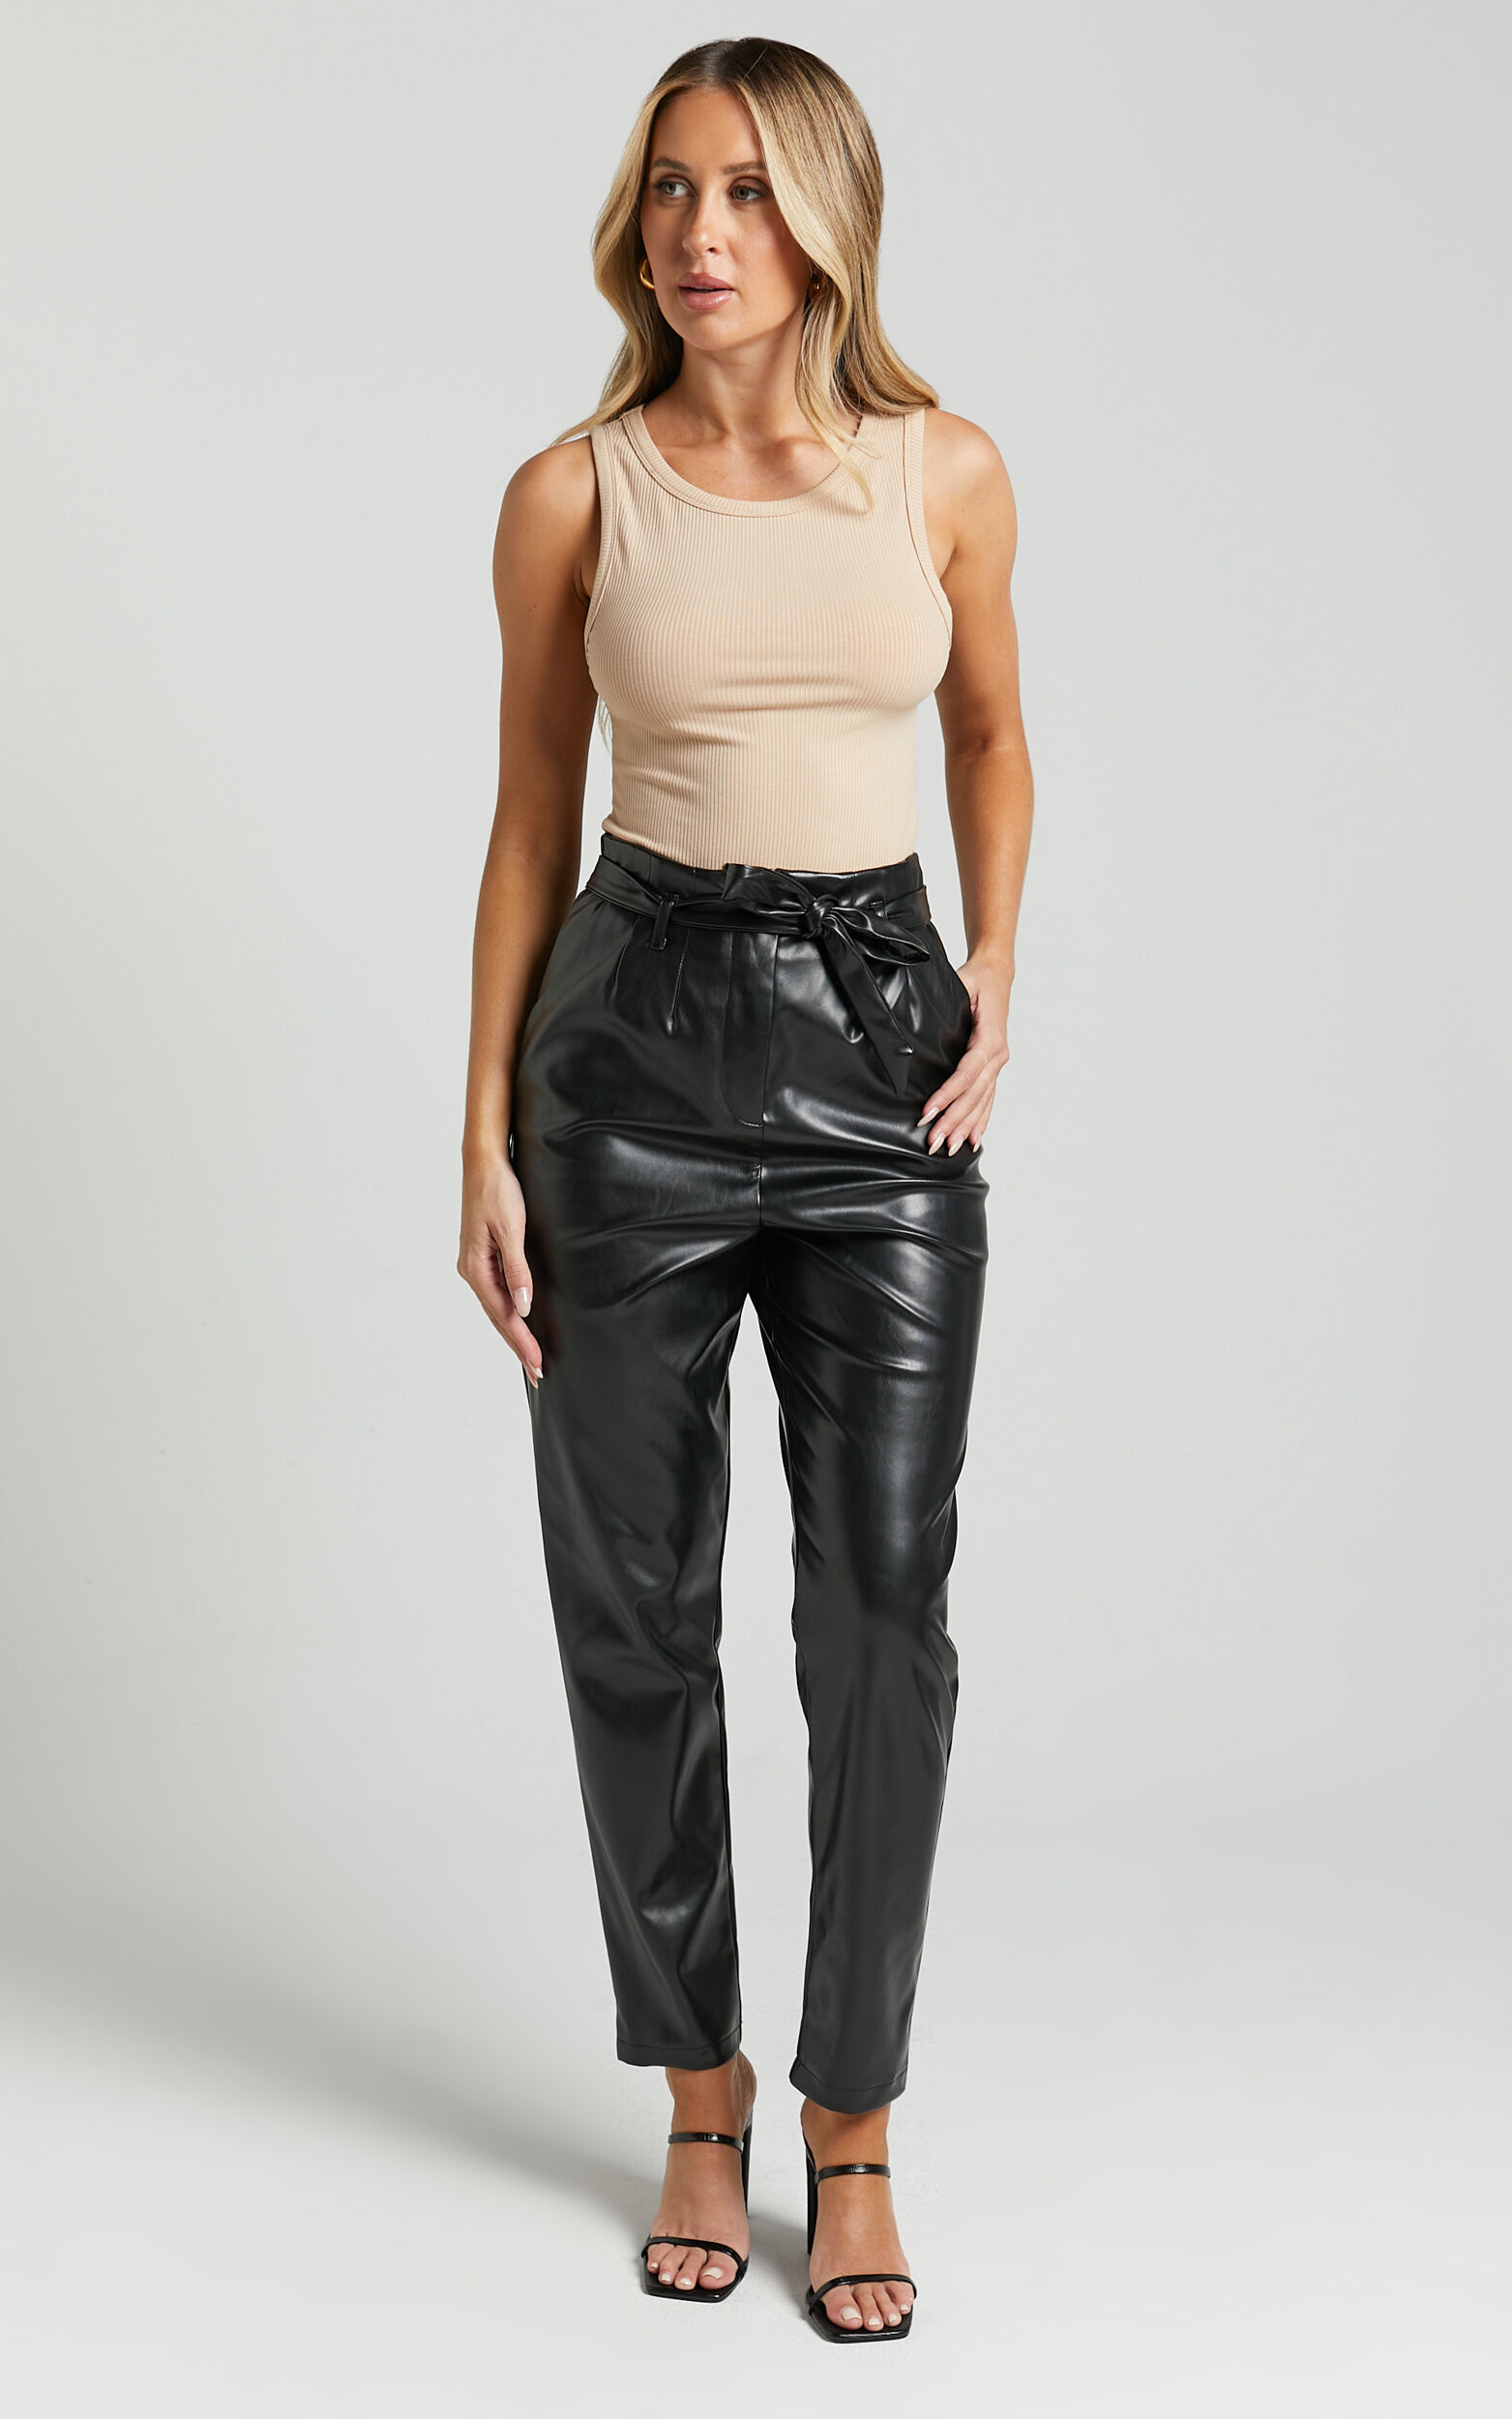 Layton Pants - Paper Bag Waist Faux Leather Pants in Black